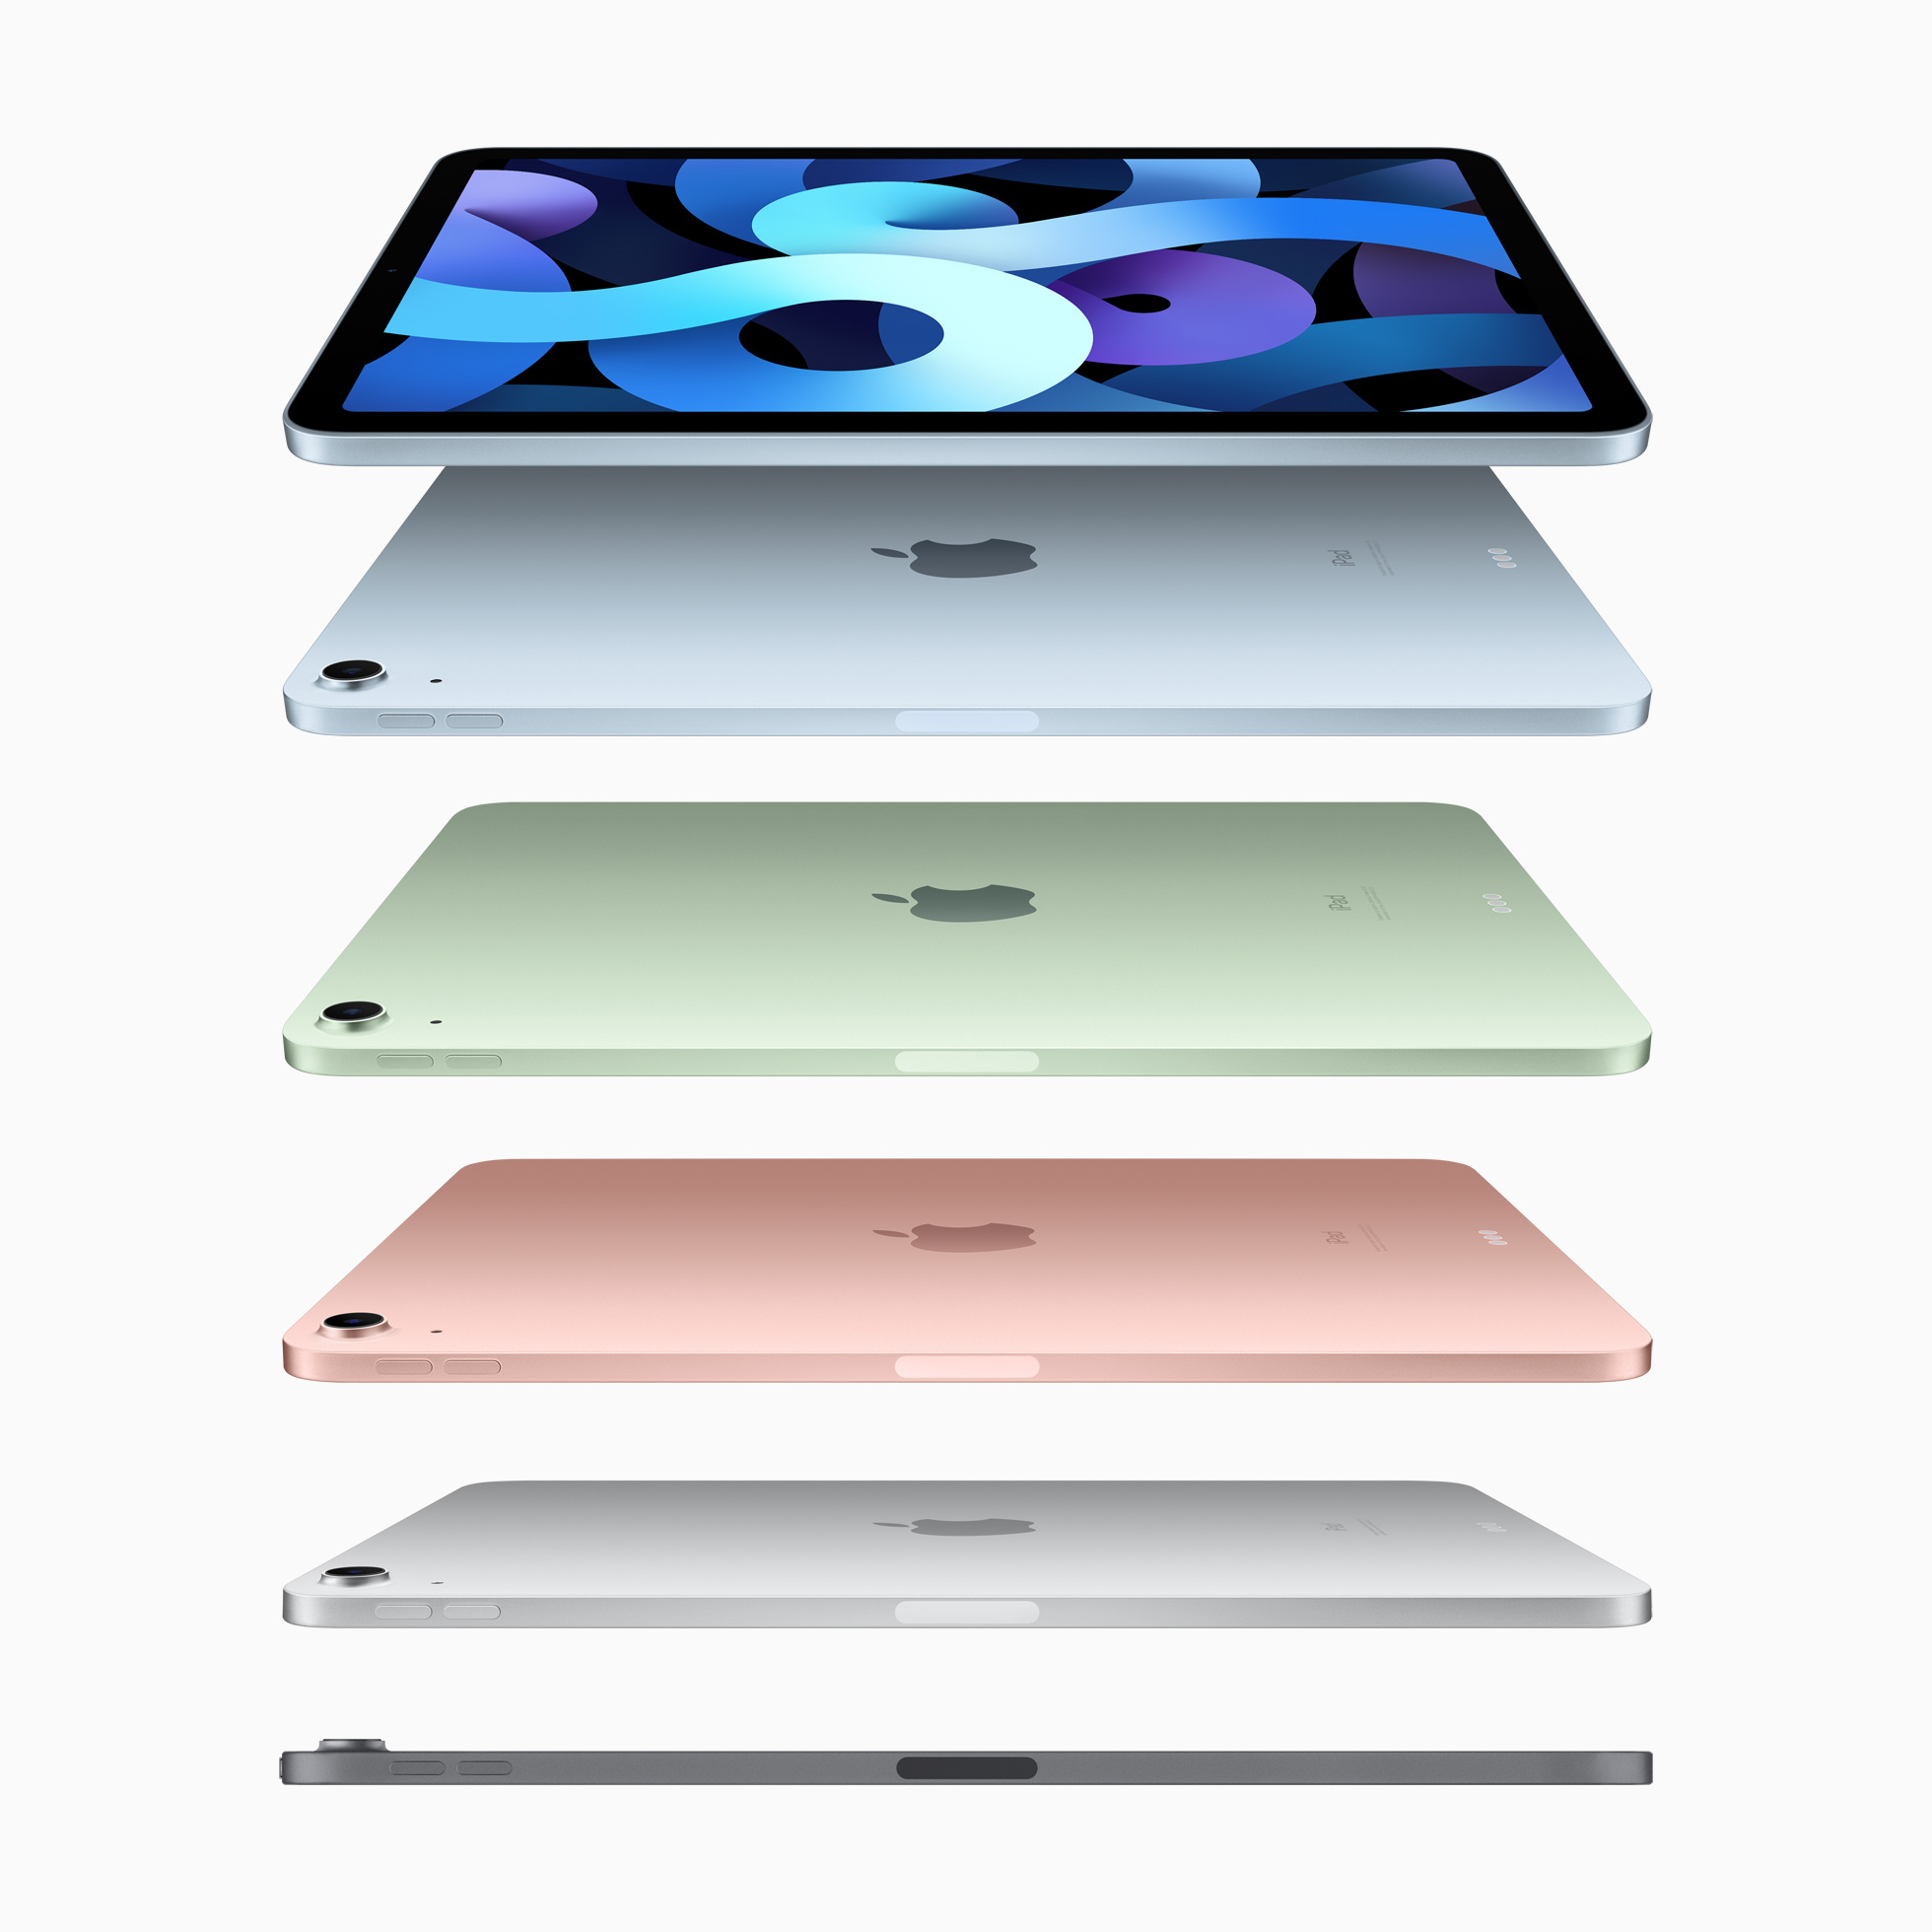 Apple's iPad Air